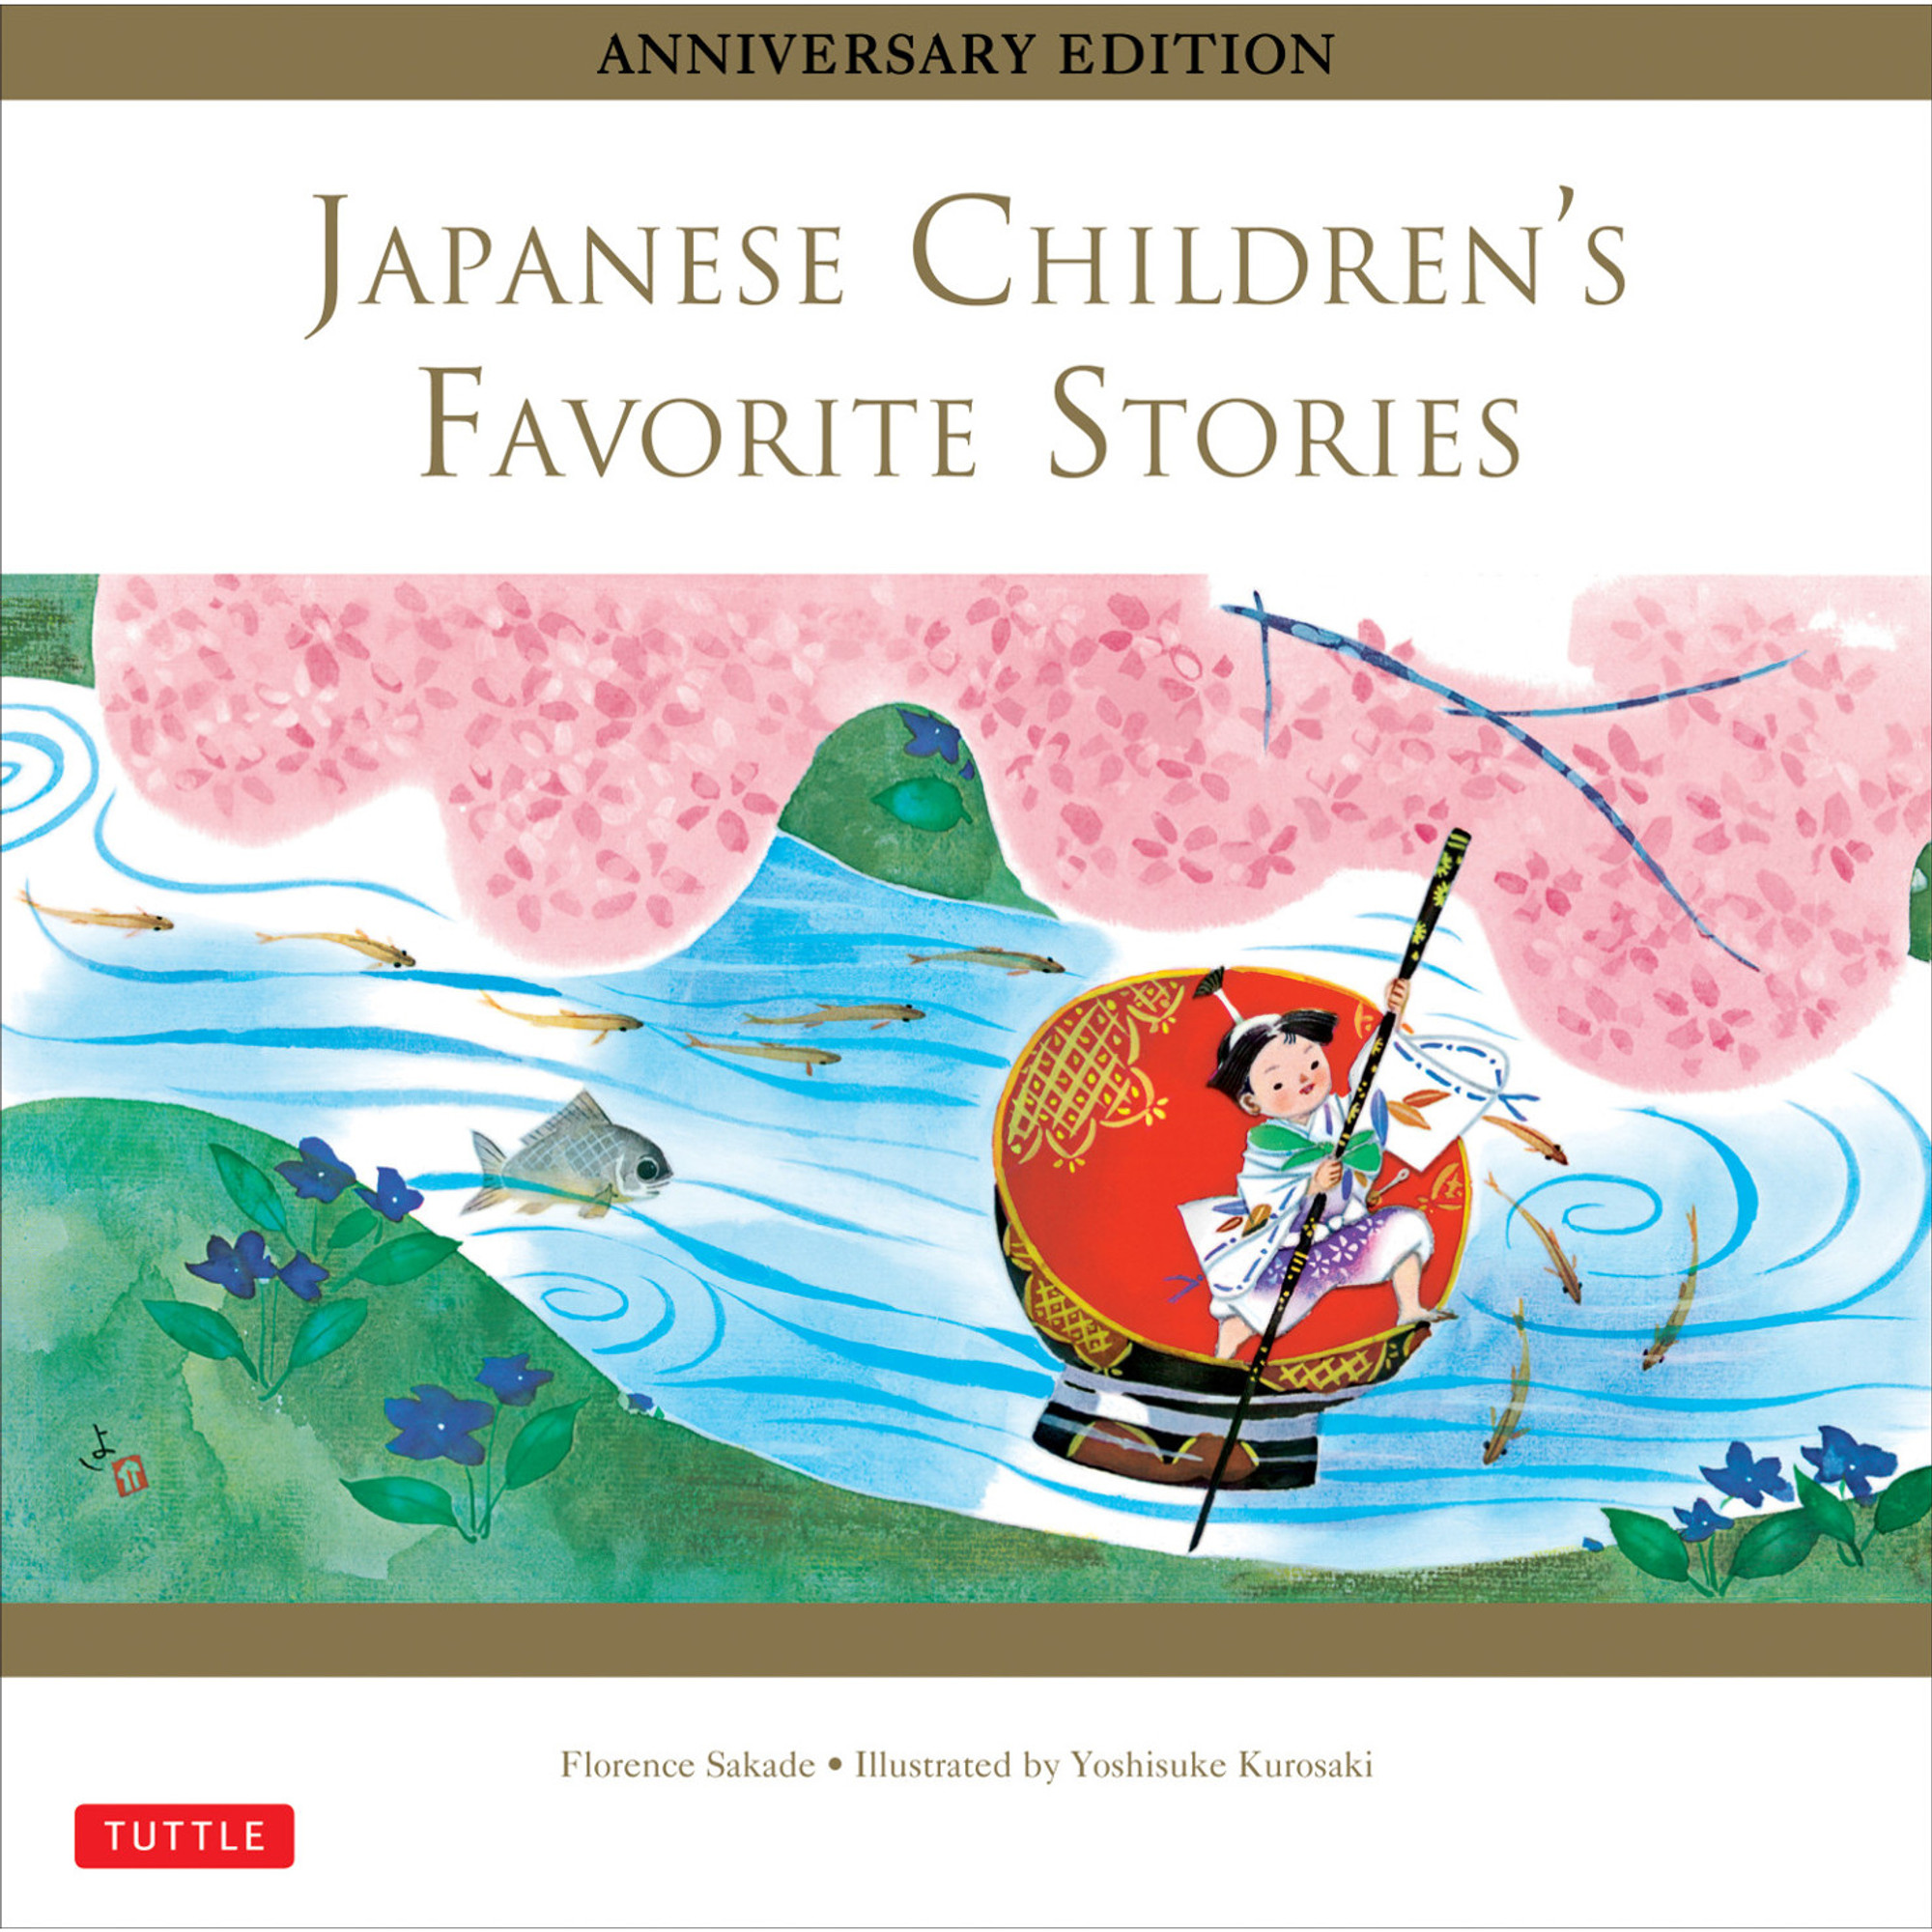 Best Japanese children's books in English